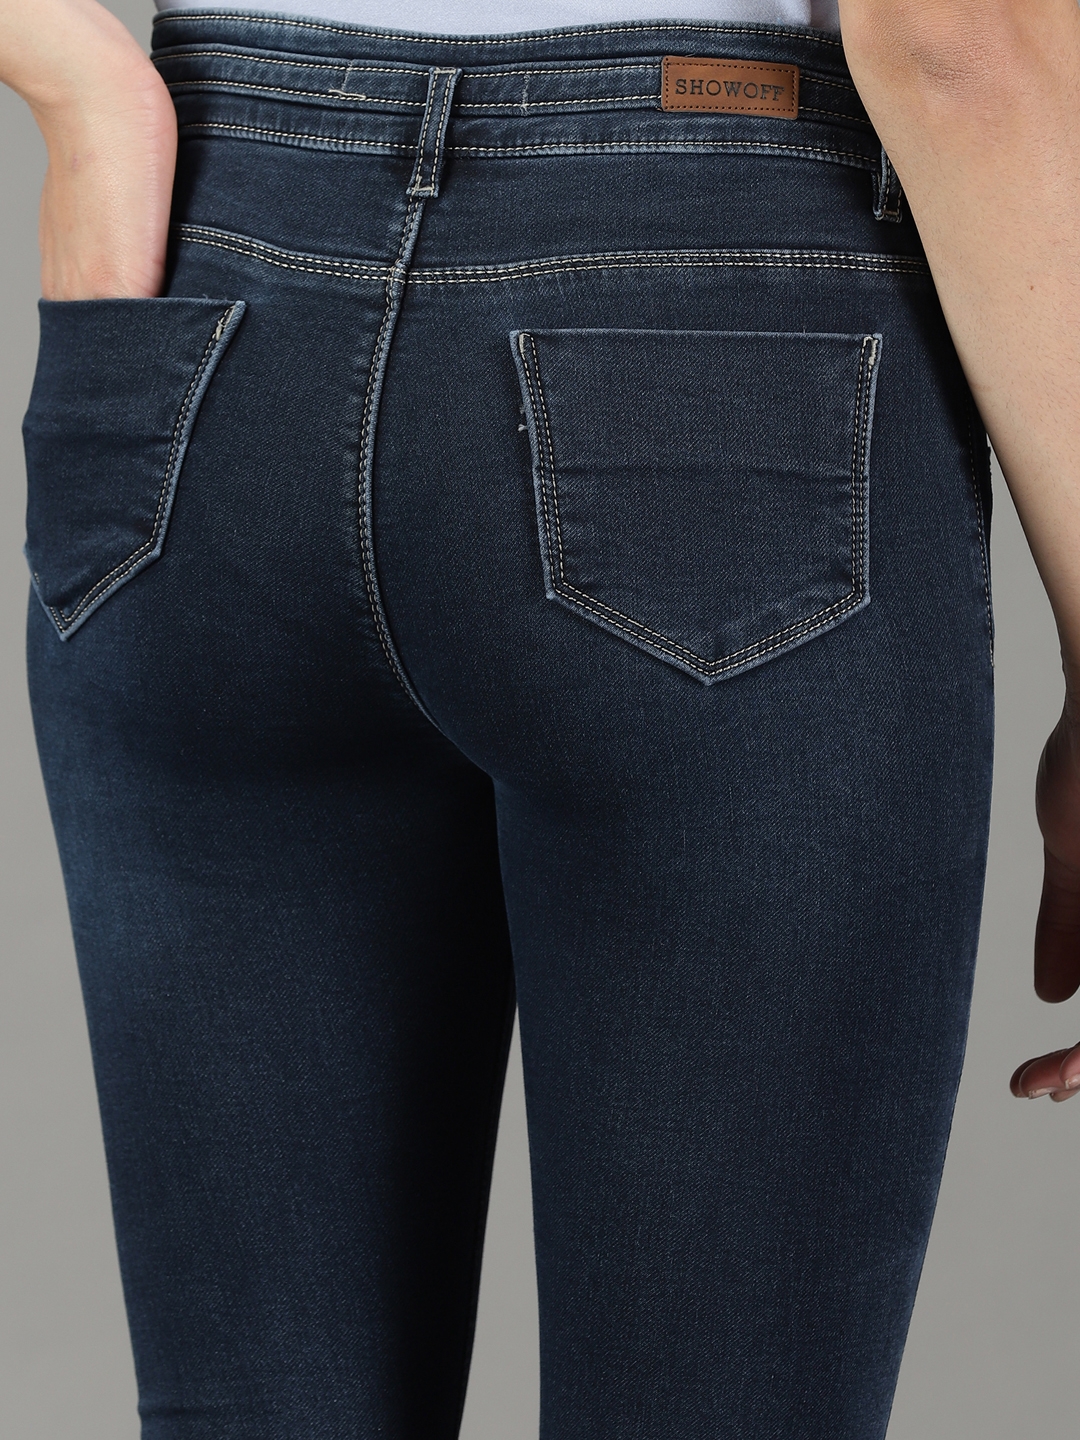 Showoff | SHOWOFF Women Navy Blue Solid  Slim Fit Jeans 6